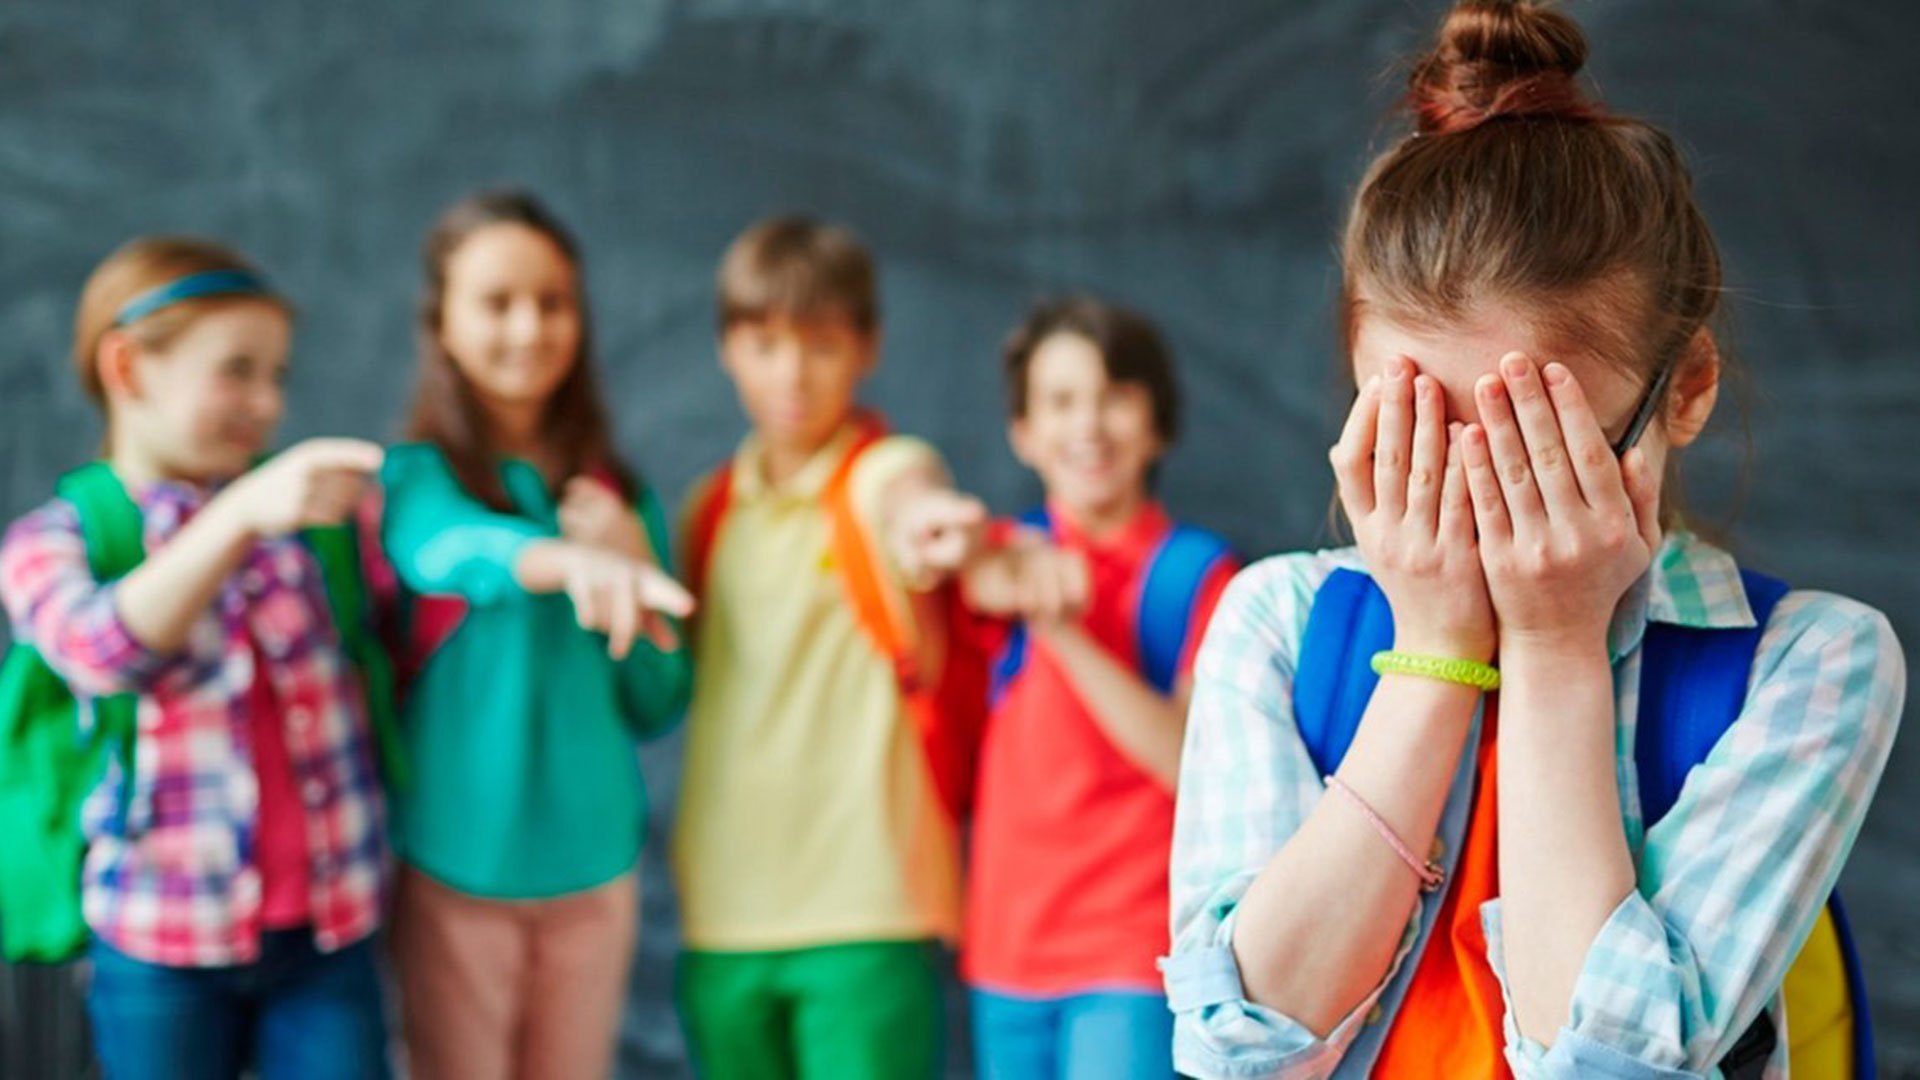 “Polifimos”: The pilot program to combat school bullying